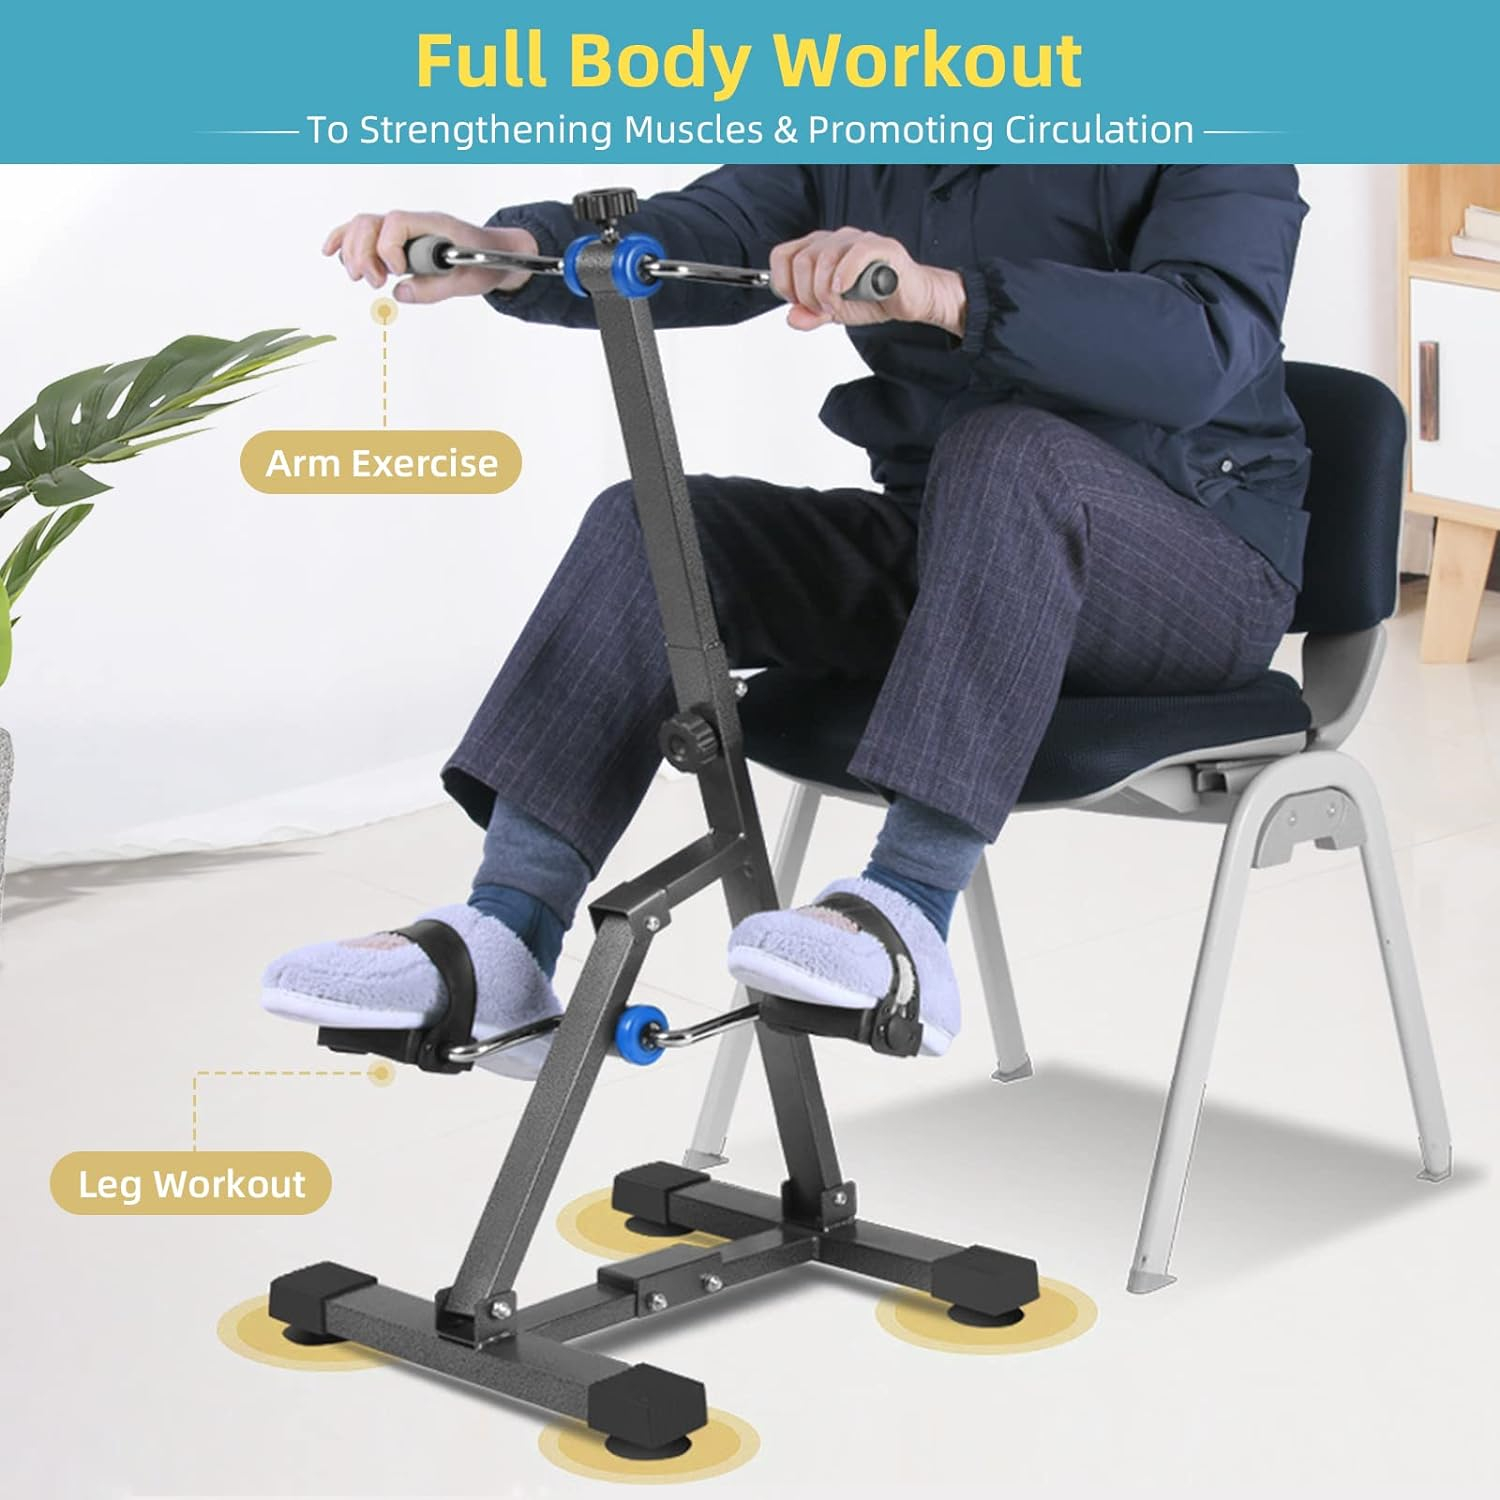 Leg Exerciser While Sitting for Senior - EasyVibe Adjustable Seated Pedal Exerciser for Physical Therapy,LegArm Workout Equipment, Foldable Pedal Exerciser for Seniors,Anti-SlipShock Absorbing